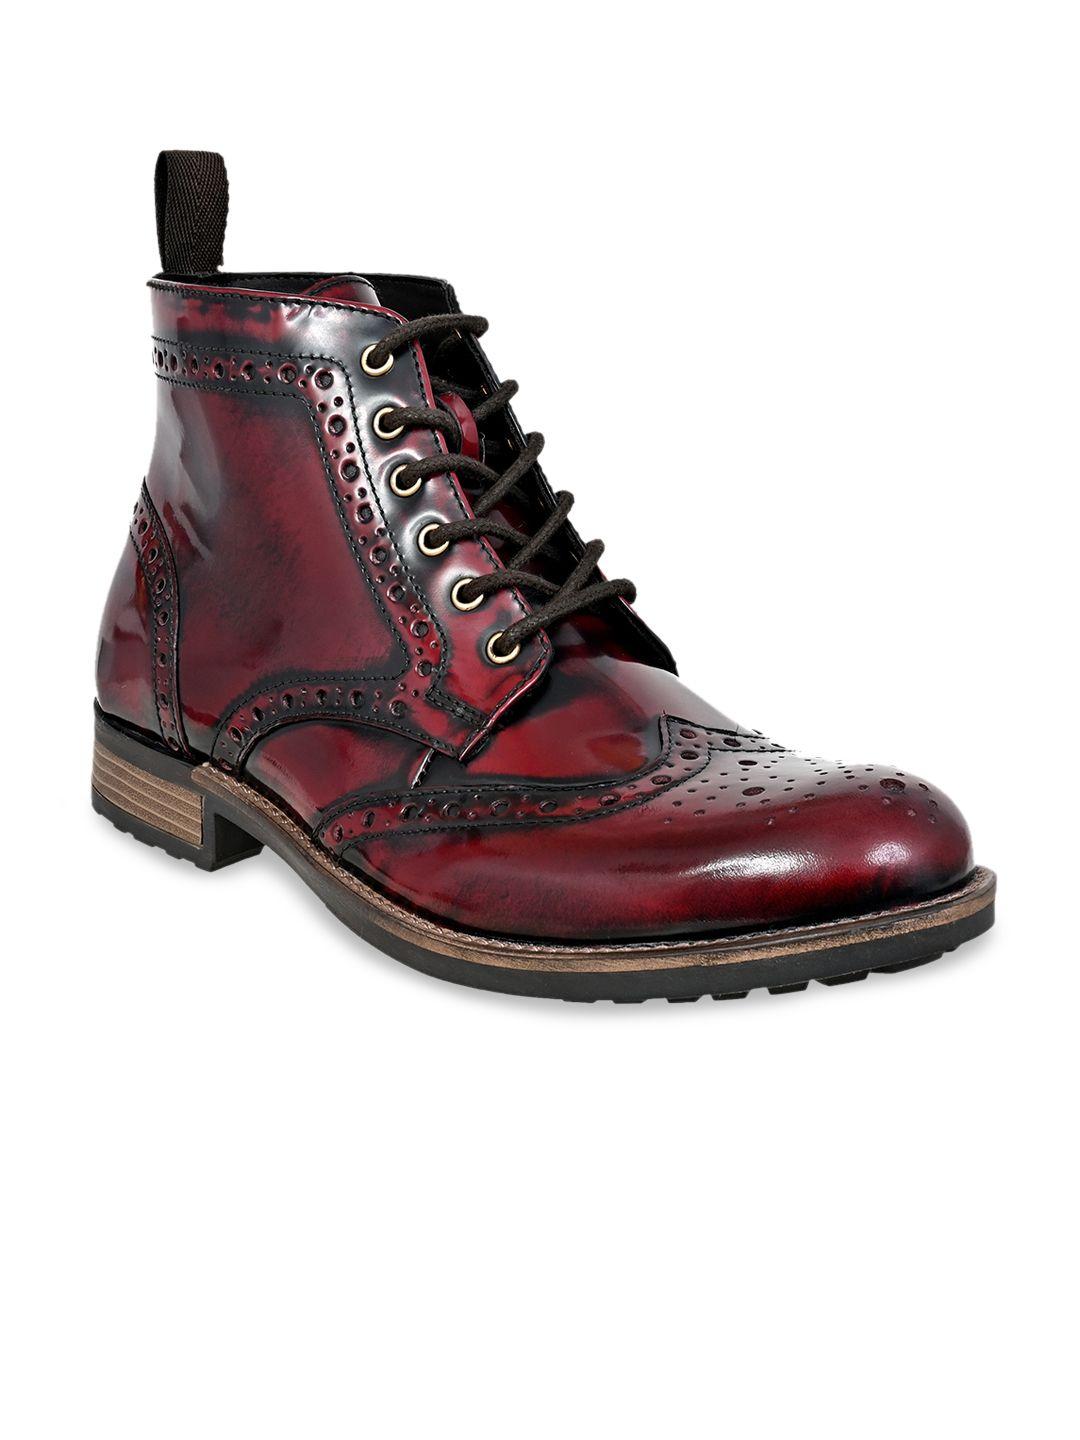 hx london men textured leather chelsea boots